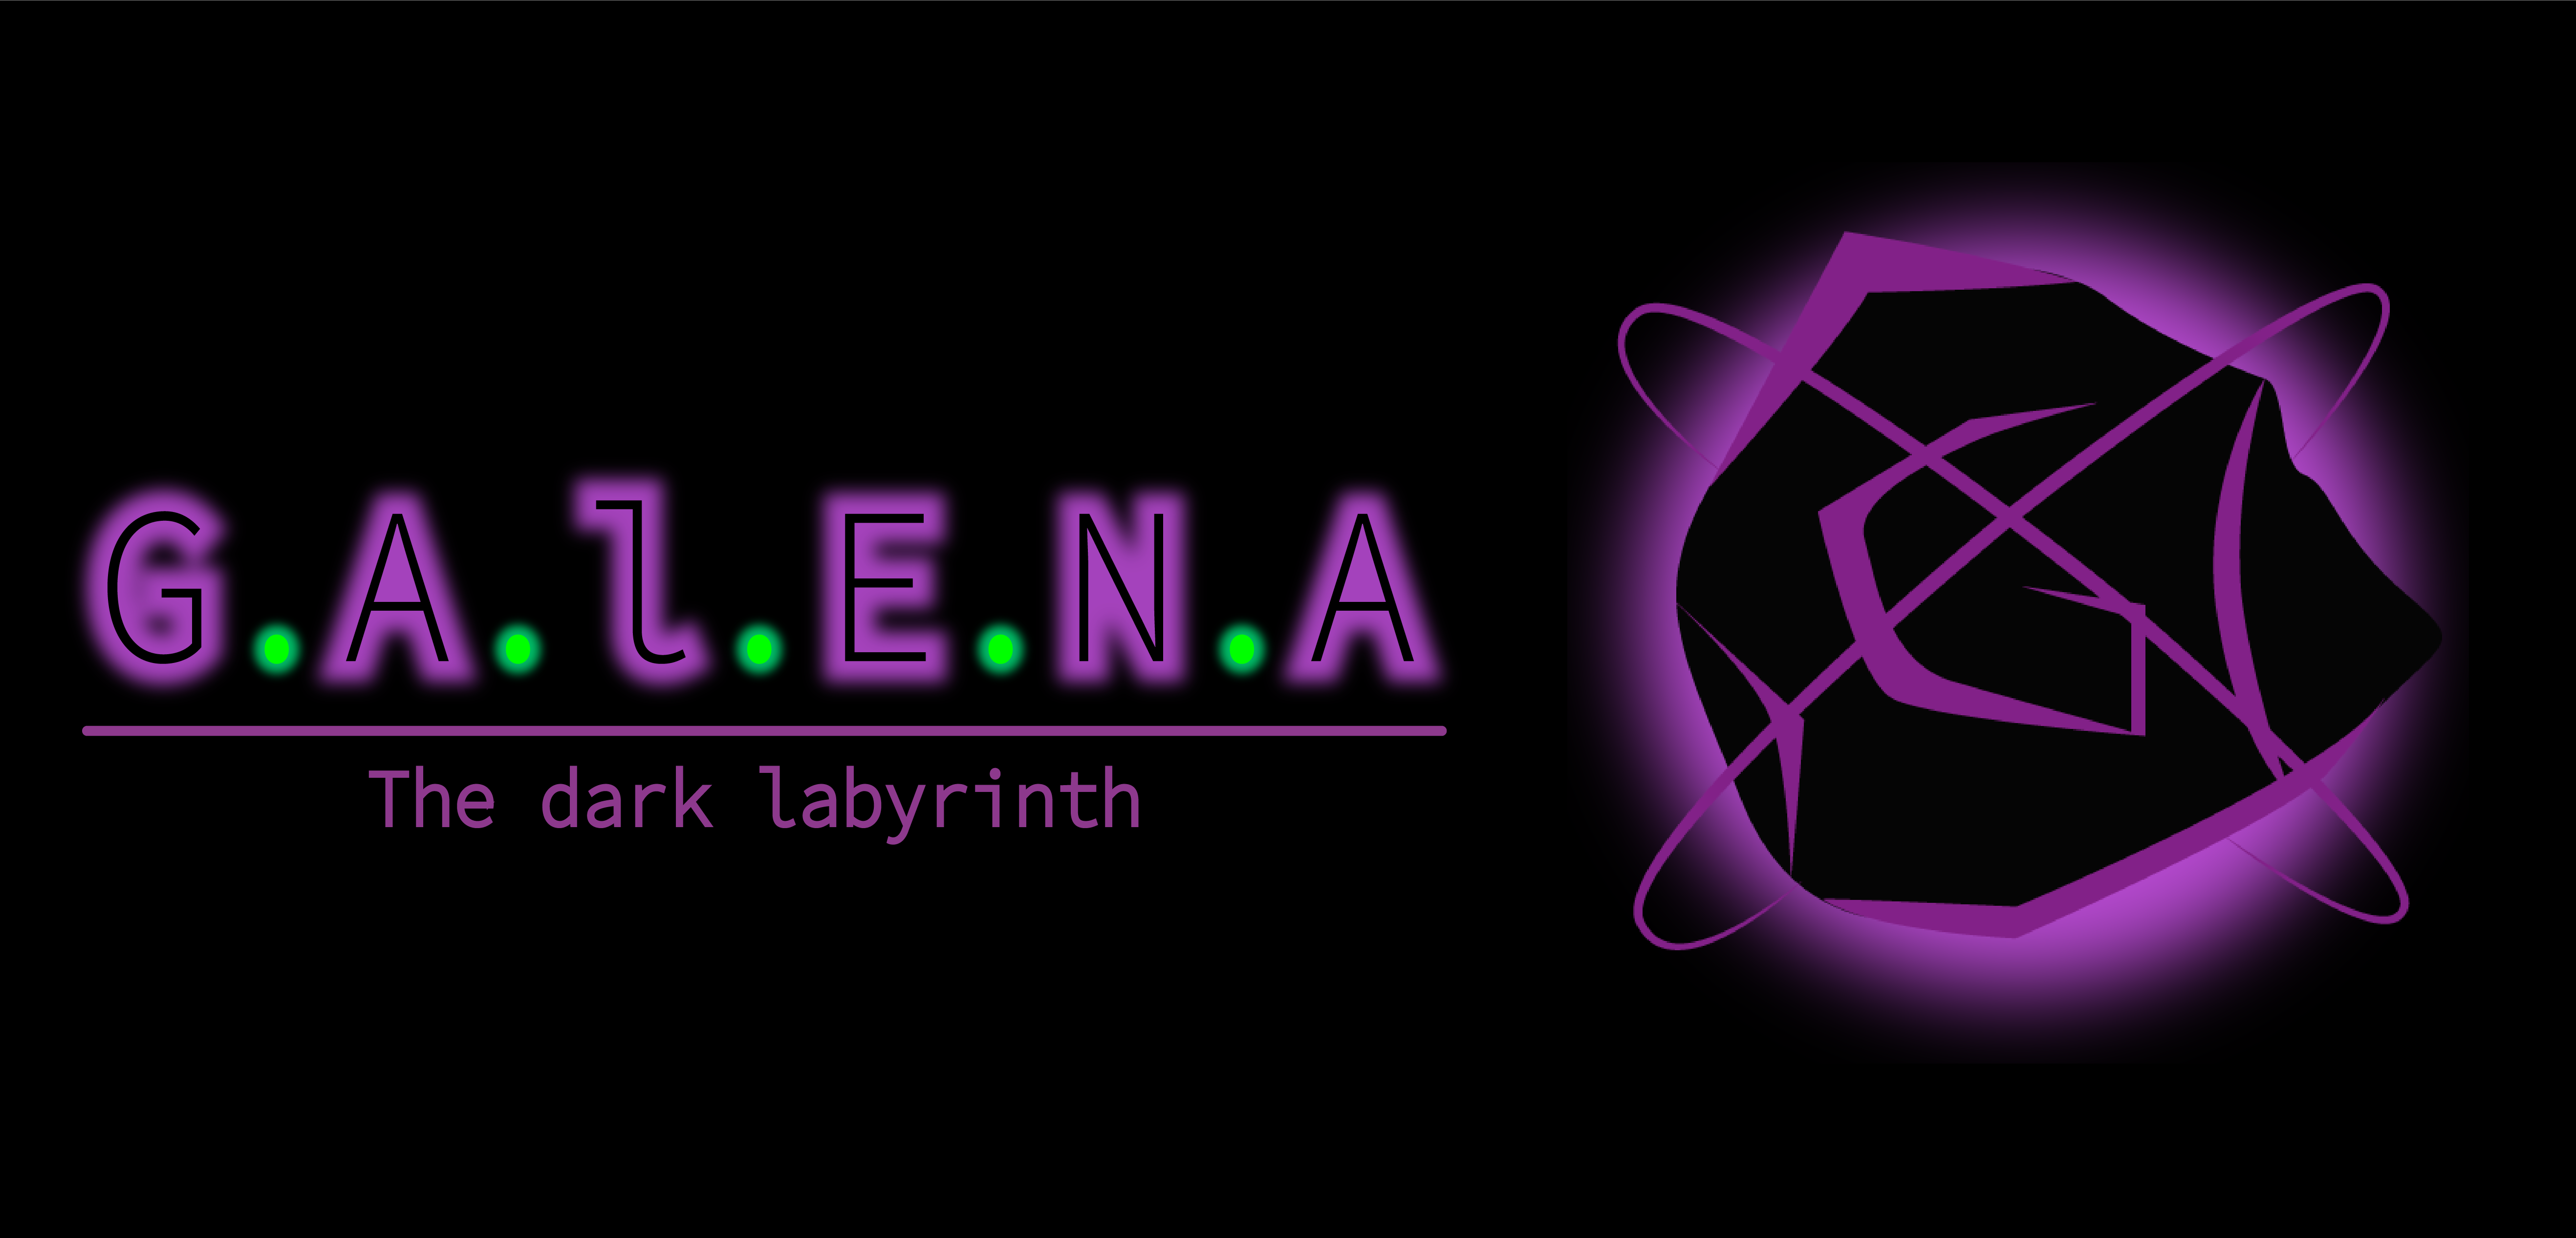 Galena: The dark labyrinth